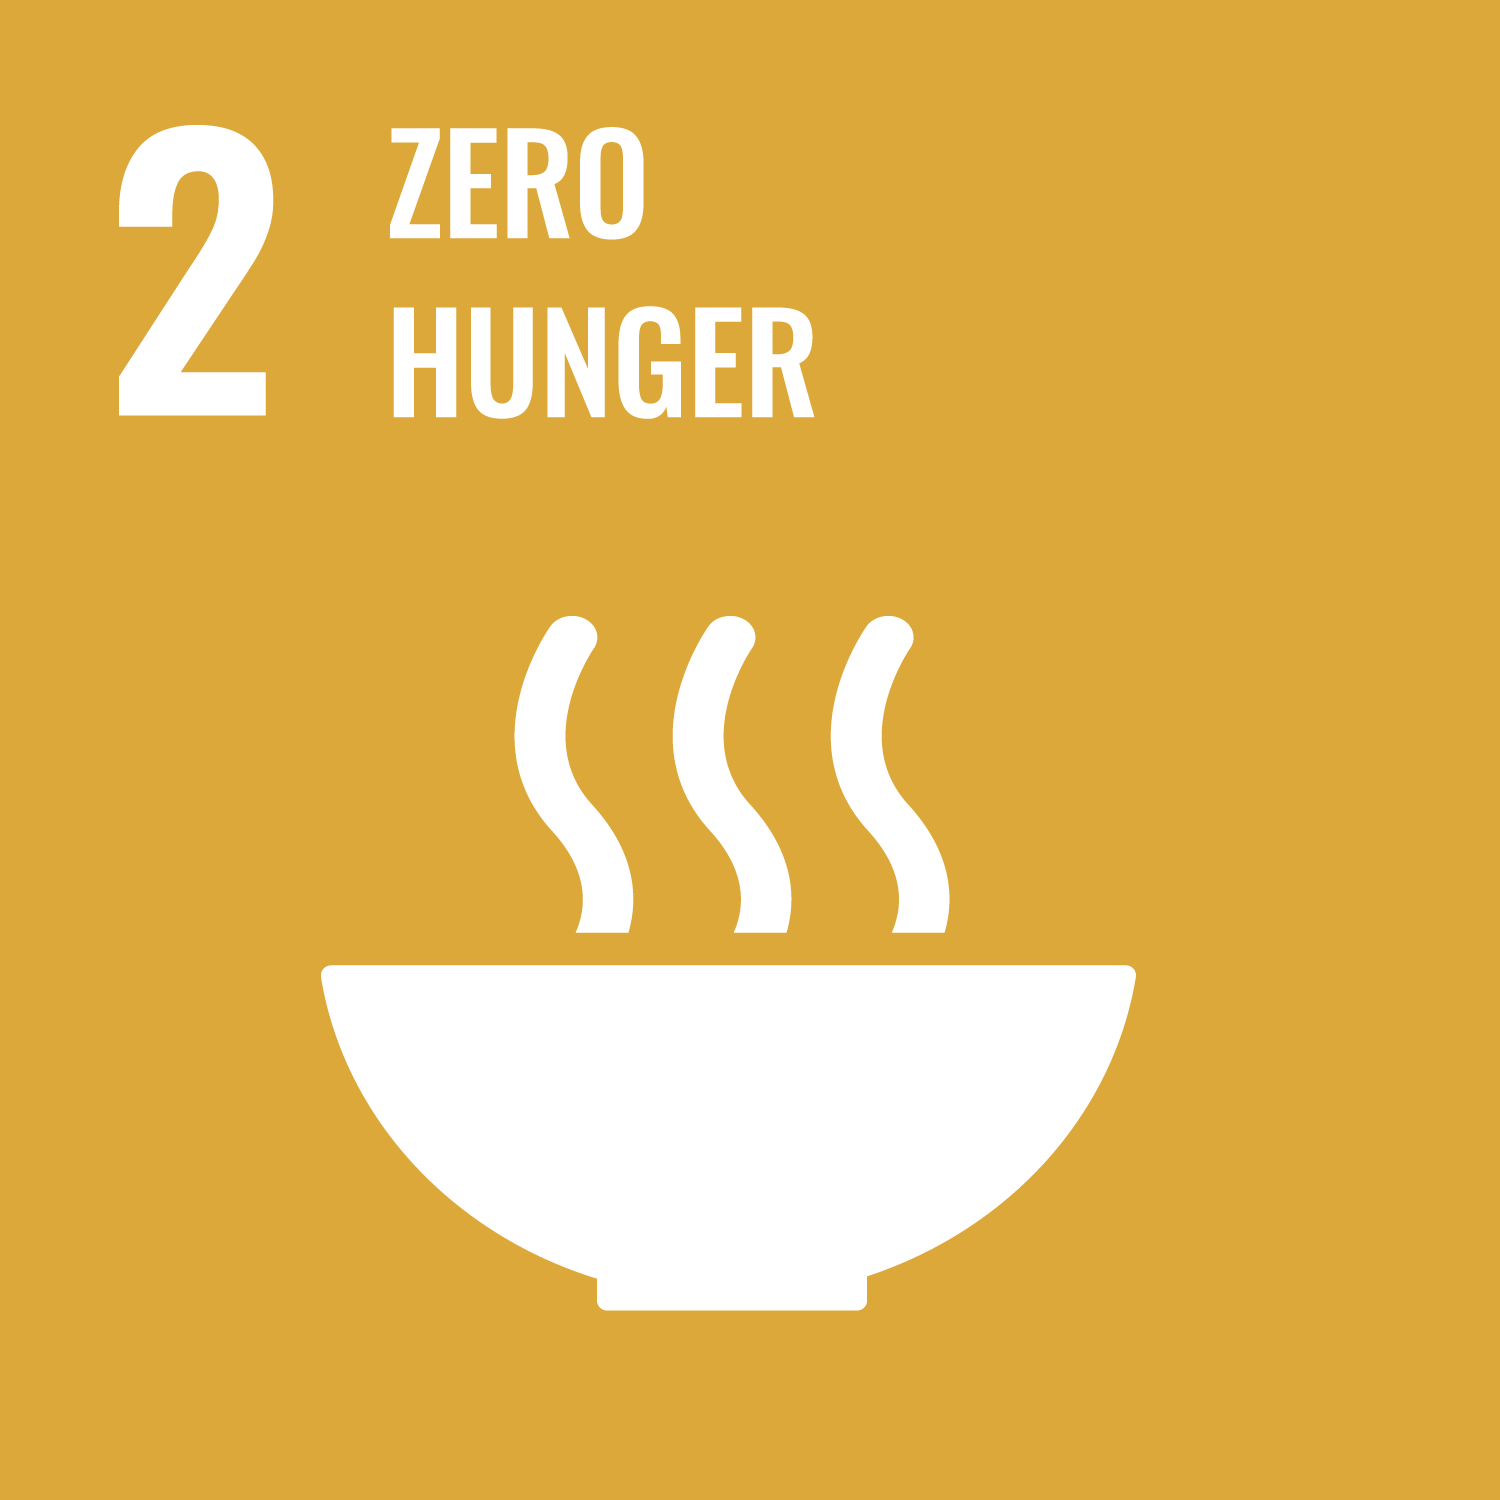 UN Sustainable Development Goal 2: Zero Hunger